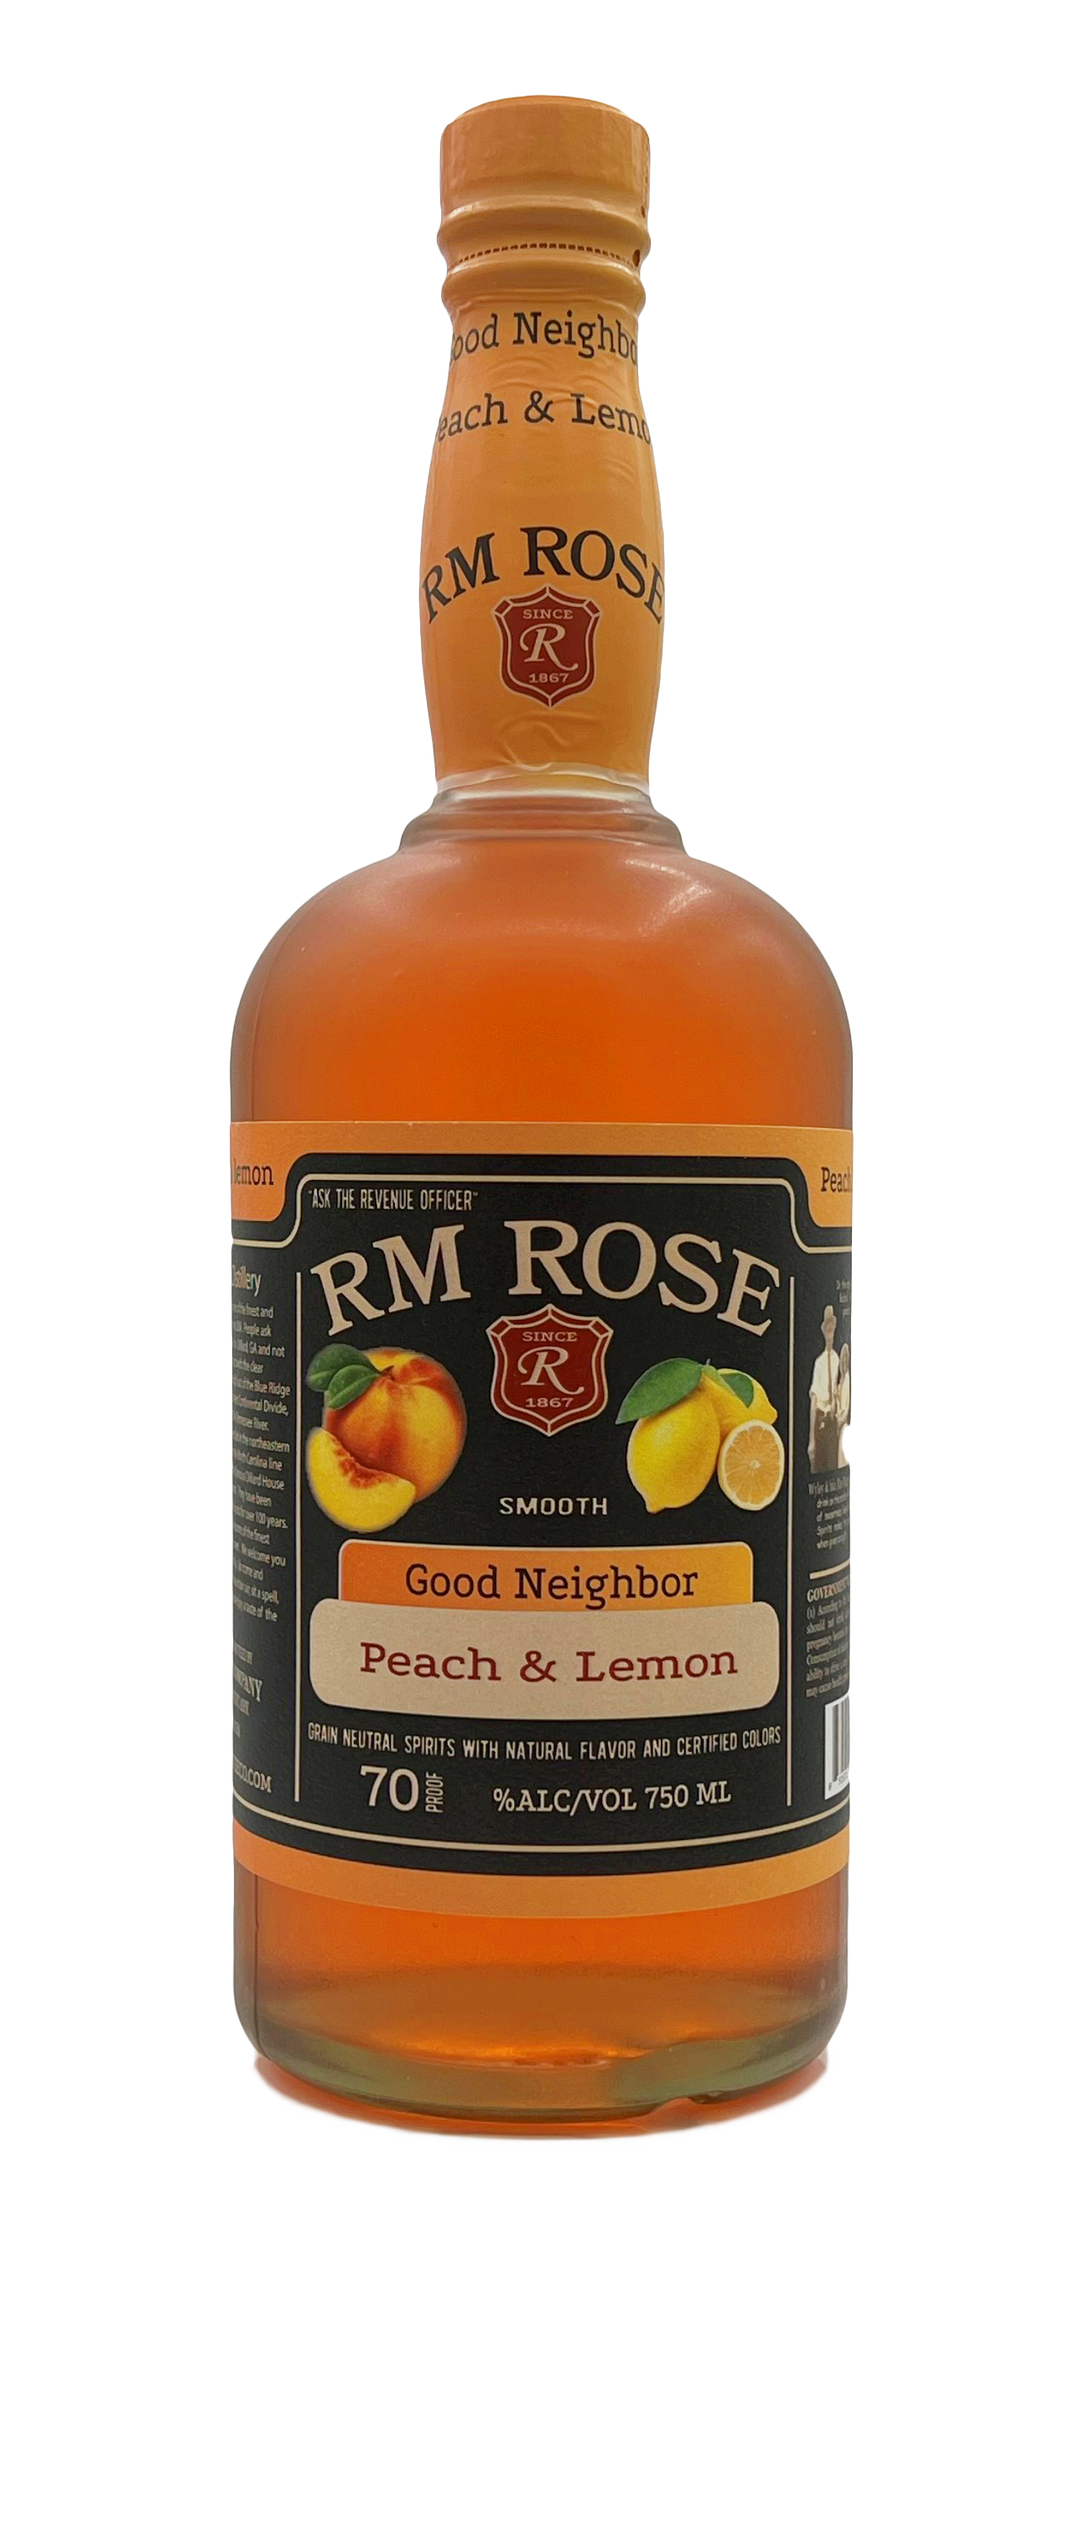 RM Rose Good Neighbor Peach and Lemon Whiskey